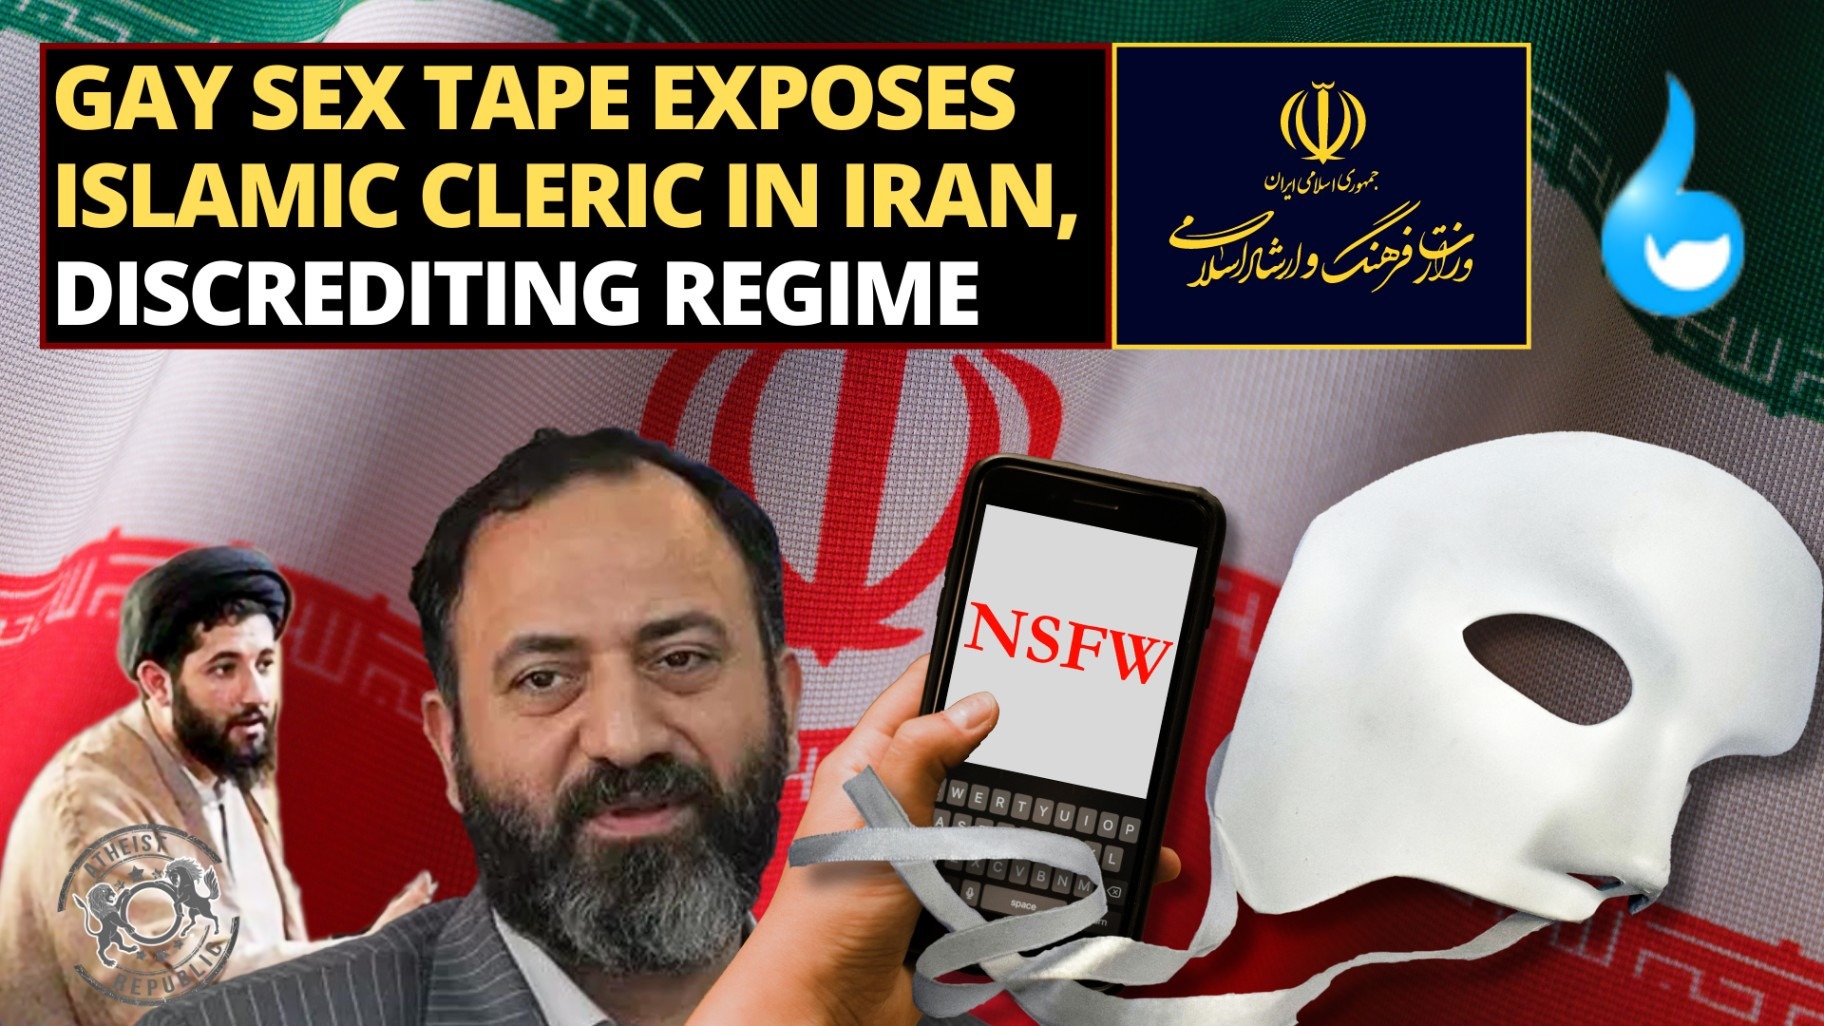 Gay Sex Tape Exposes Islamic Cleric in Iran, Discrediting Regime